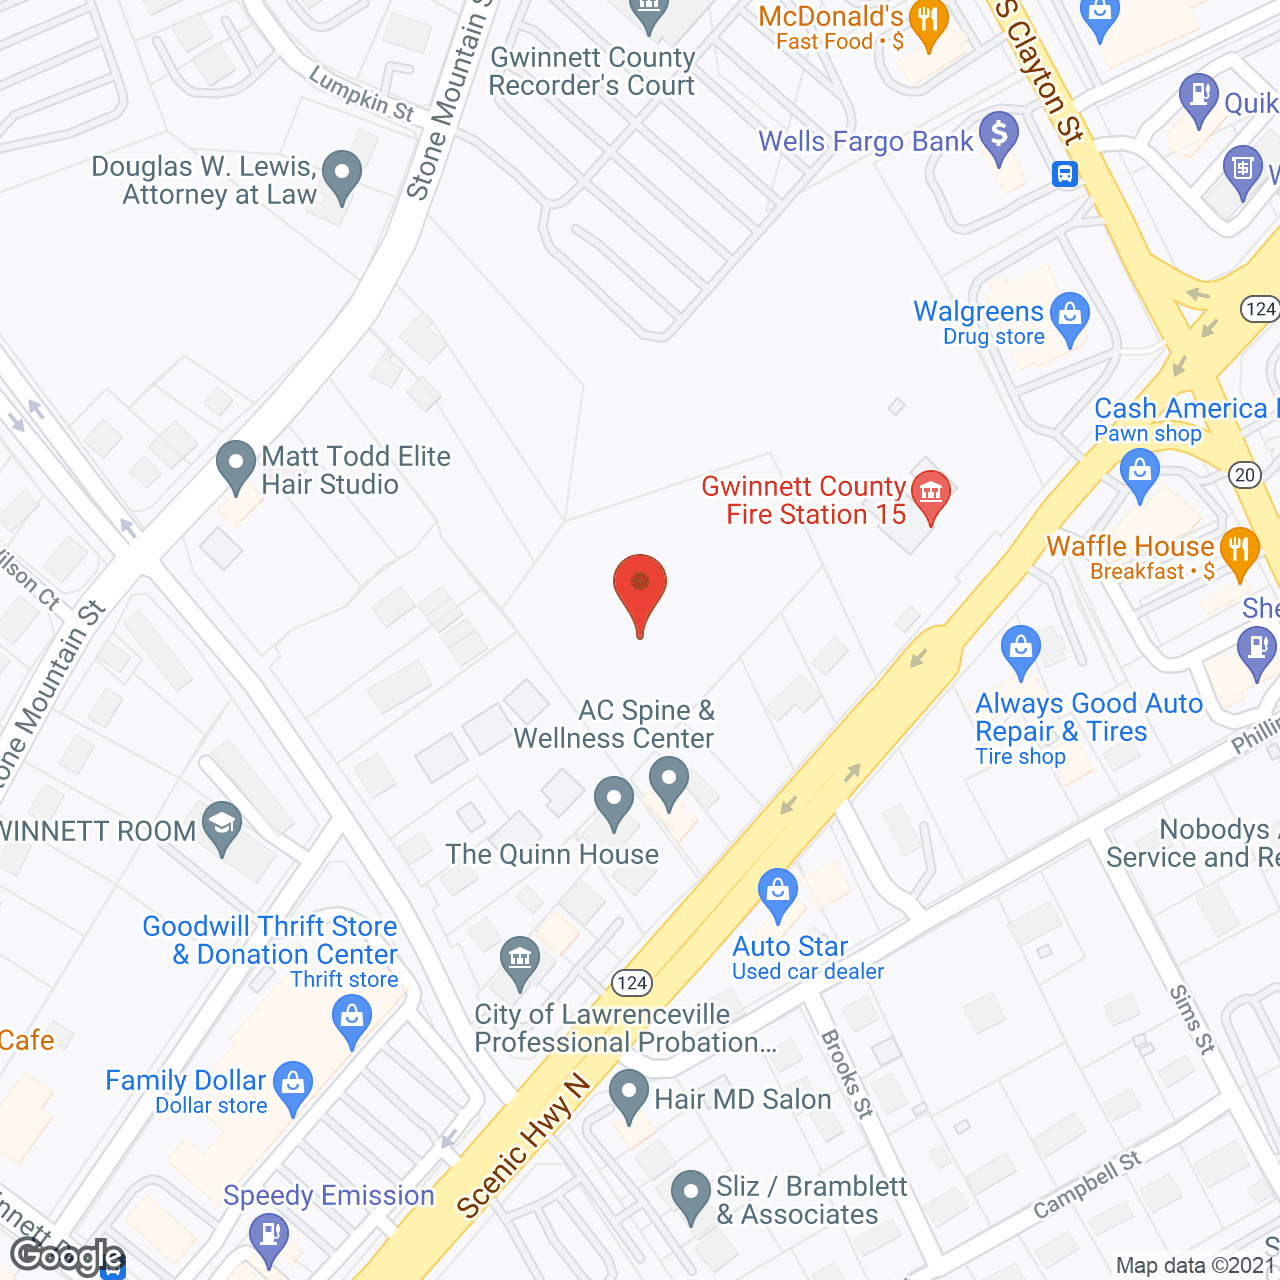 Medical Arts Health Facility in google map